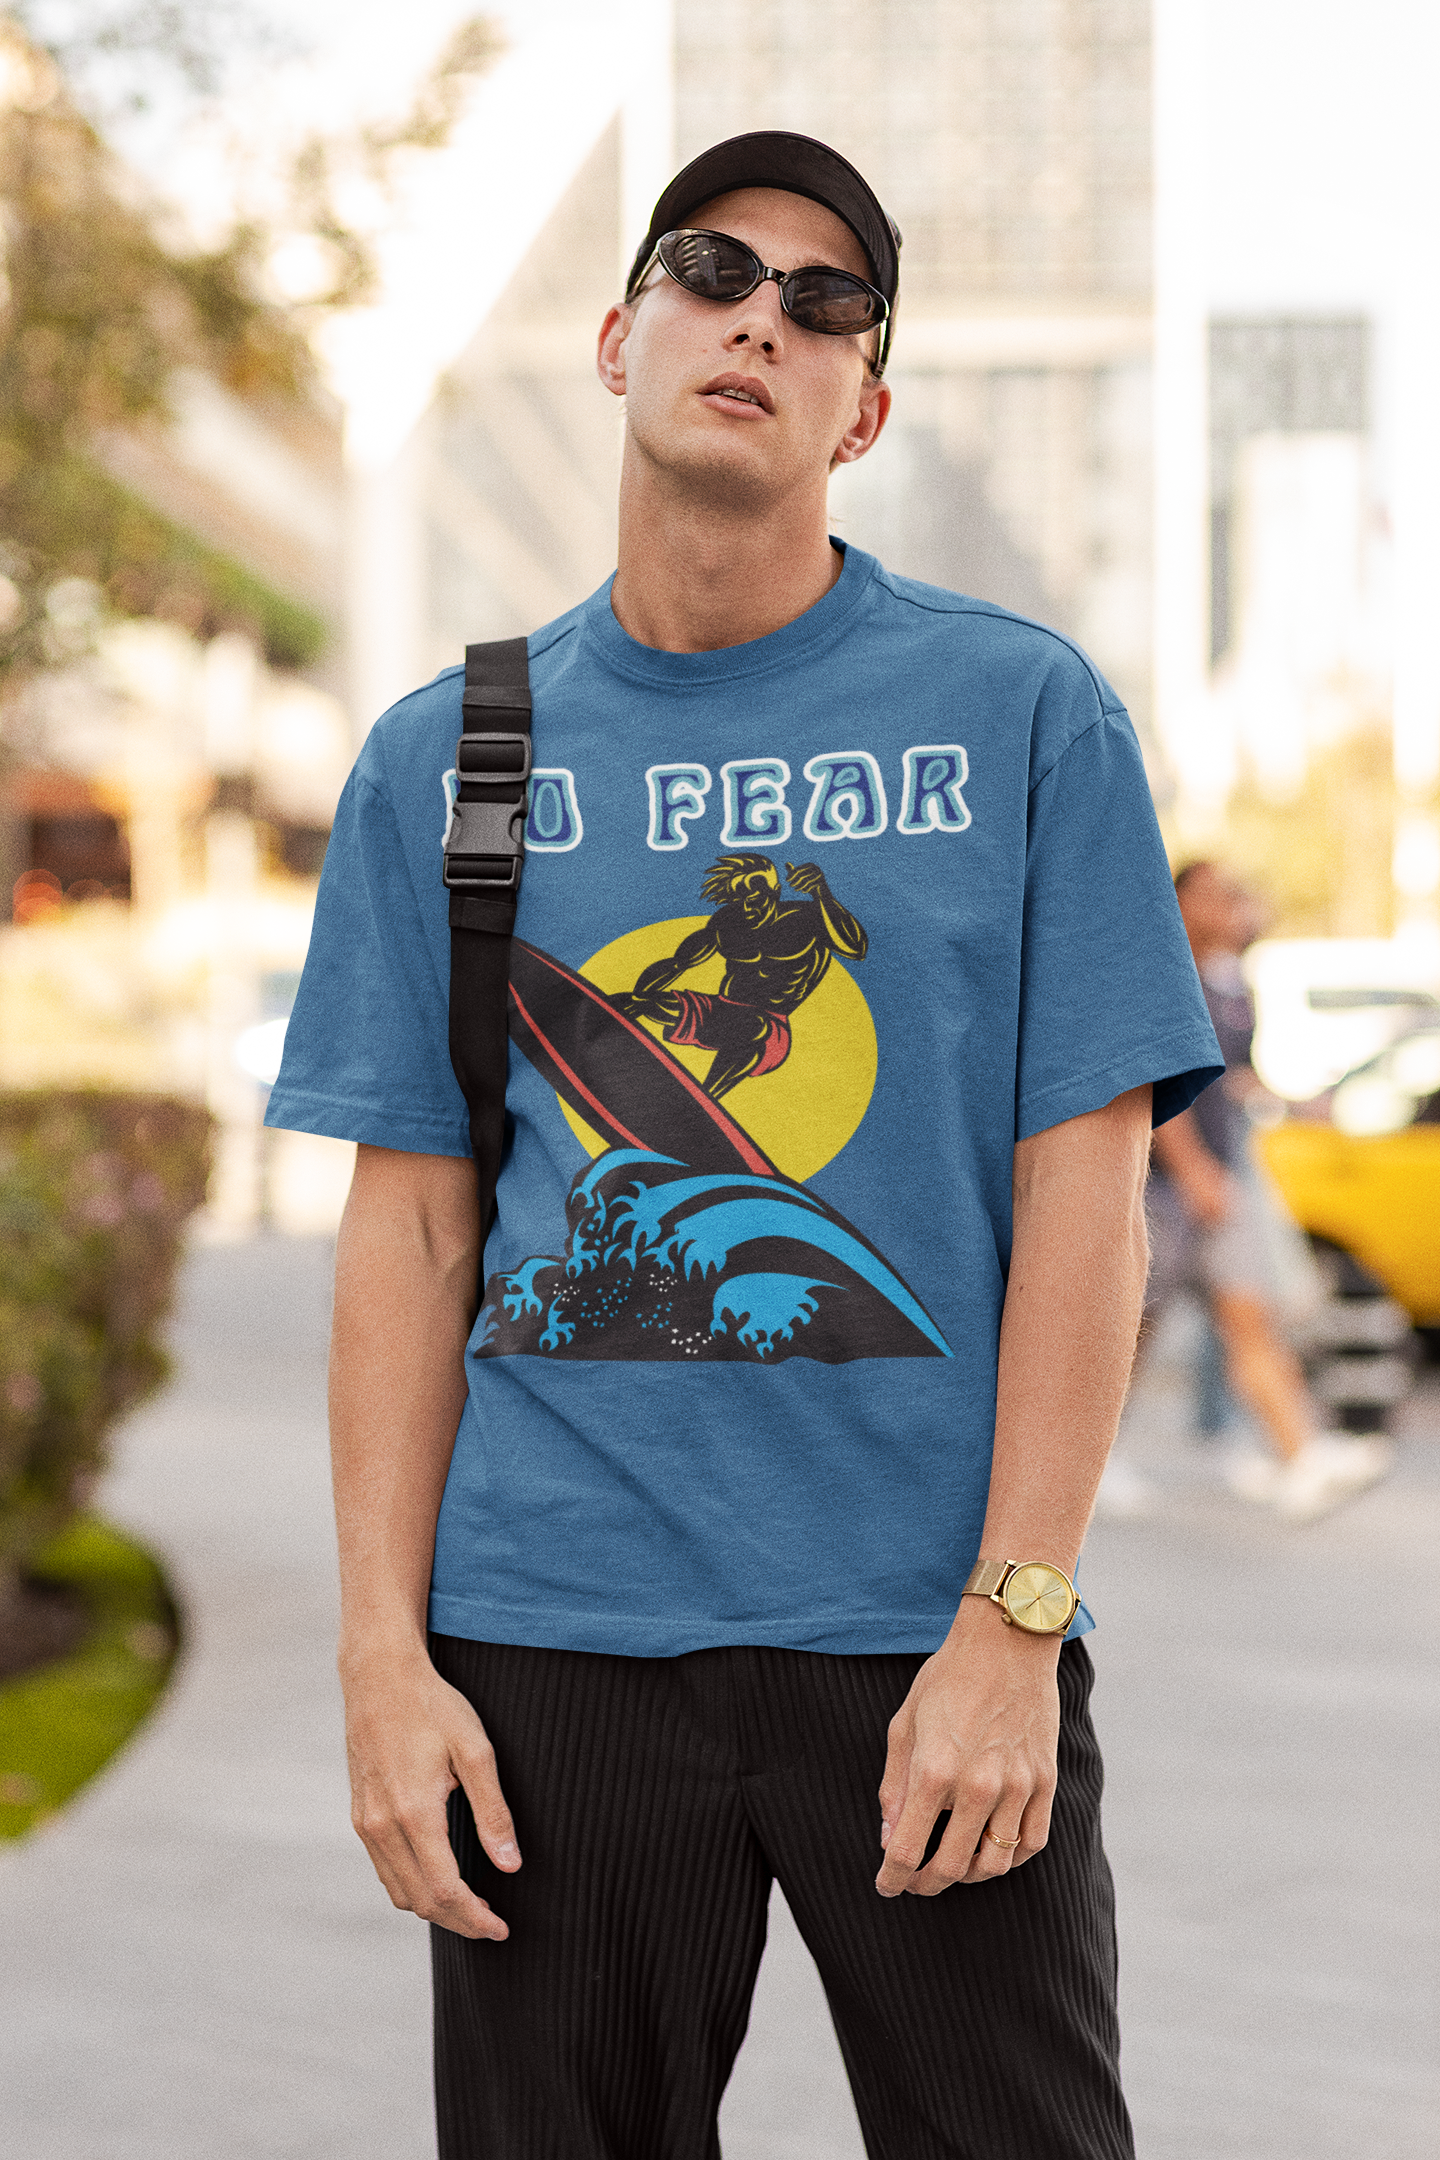 Camiseta pesada No Fear Lone Surfer